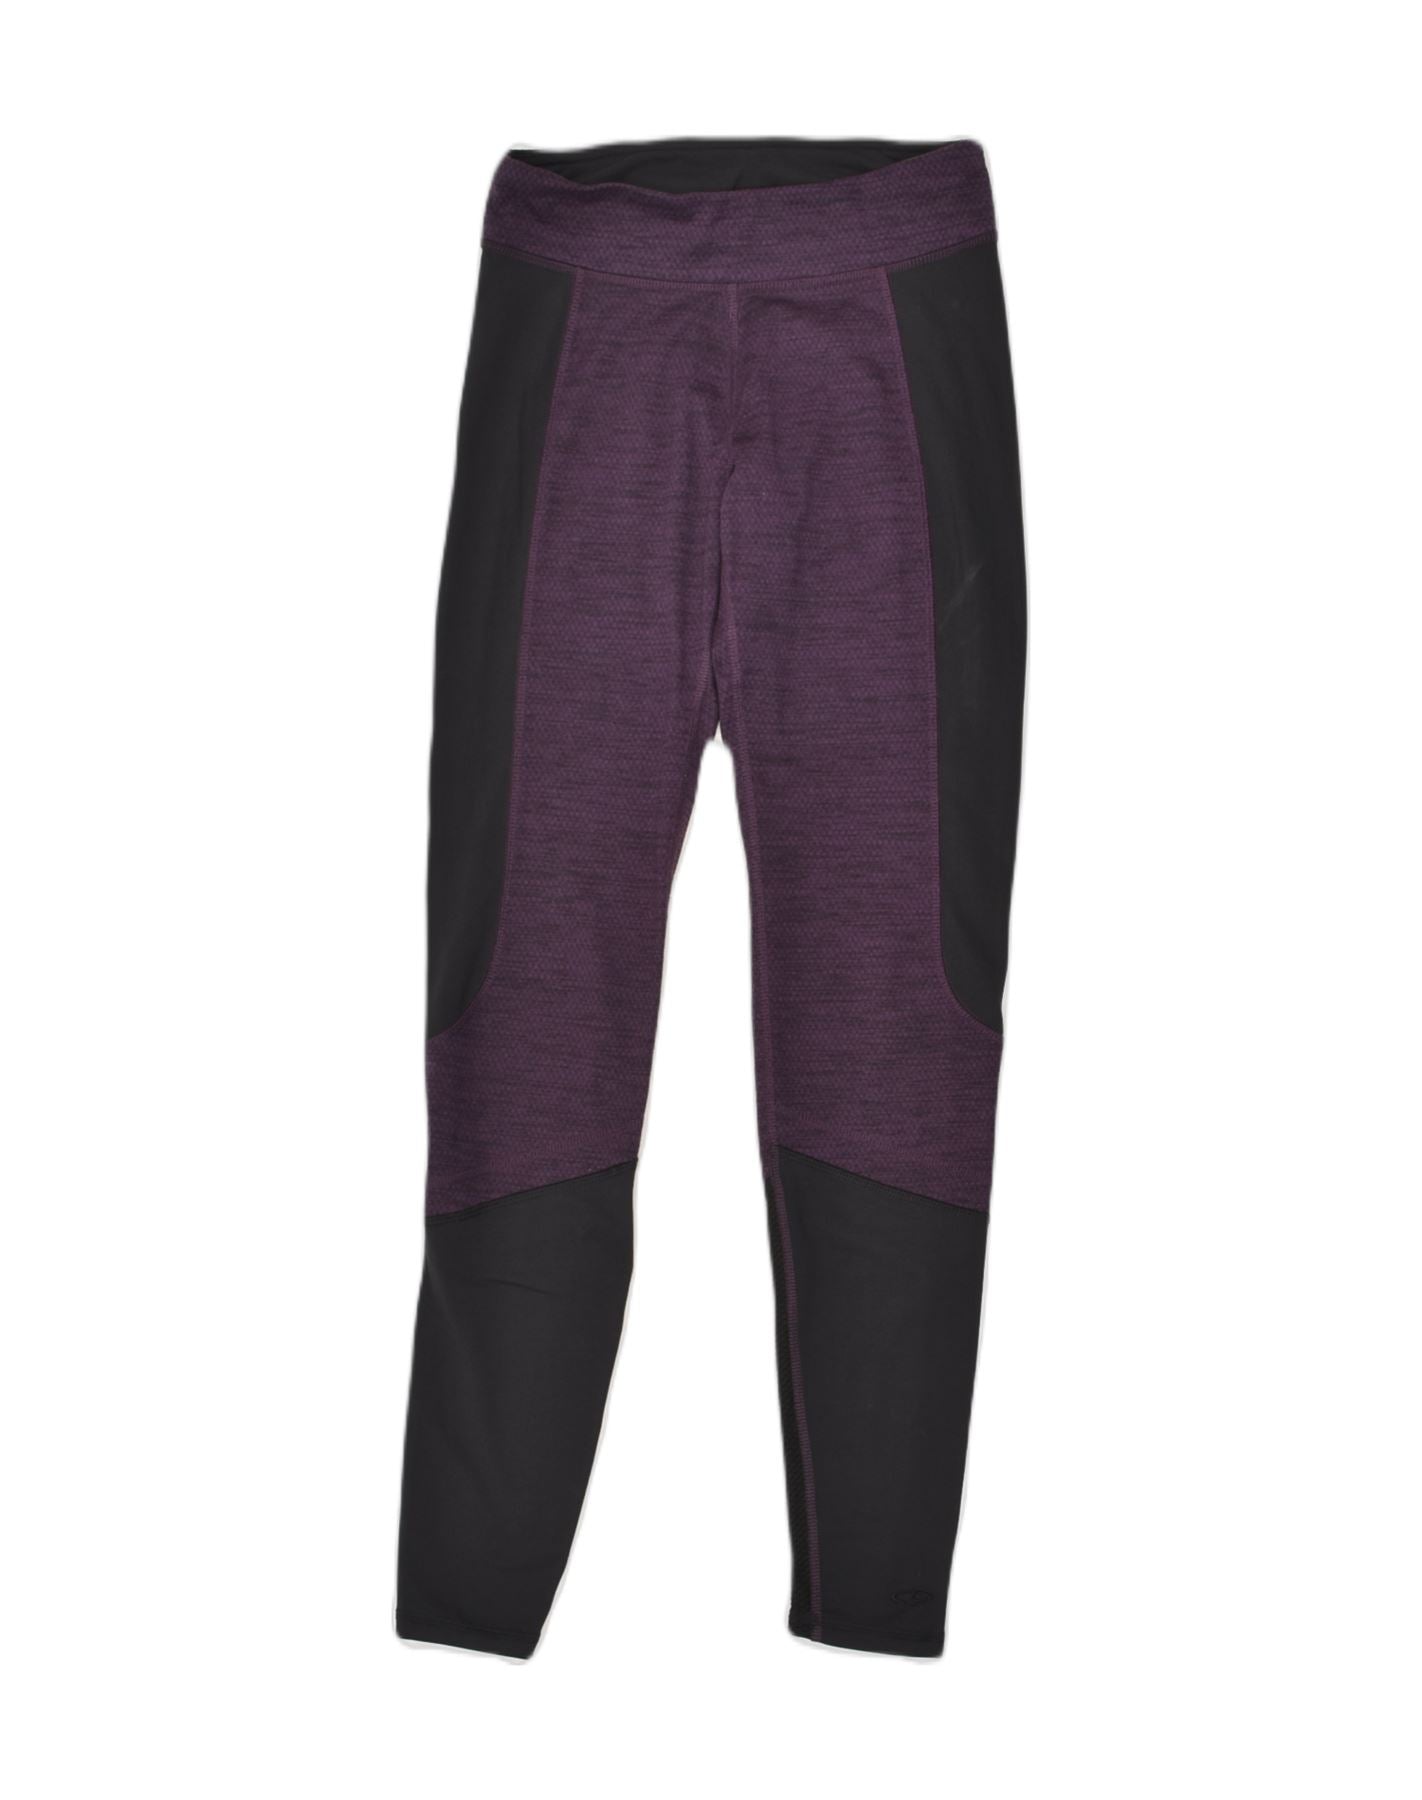 CHAMPION Womens Leggings UK 6 XS Purple Colourblock Polyester, Vintage &  Second-Hand Clothing Online